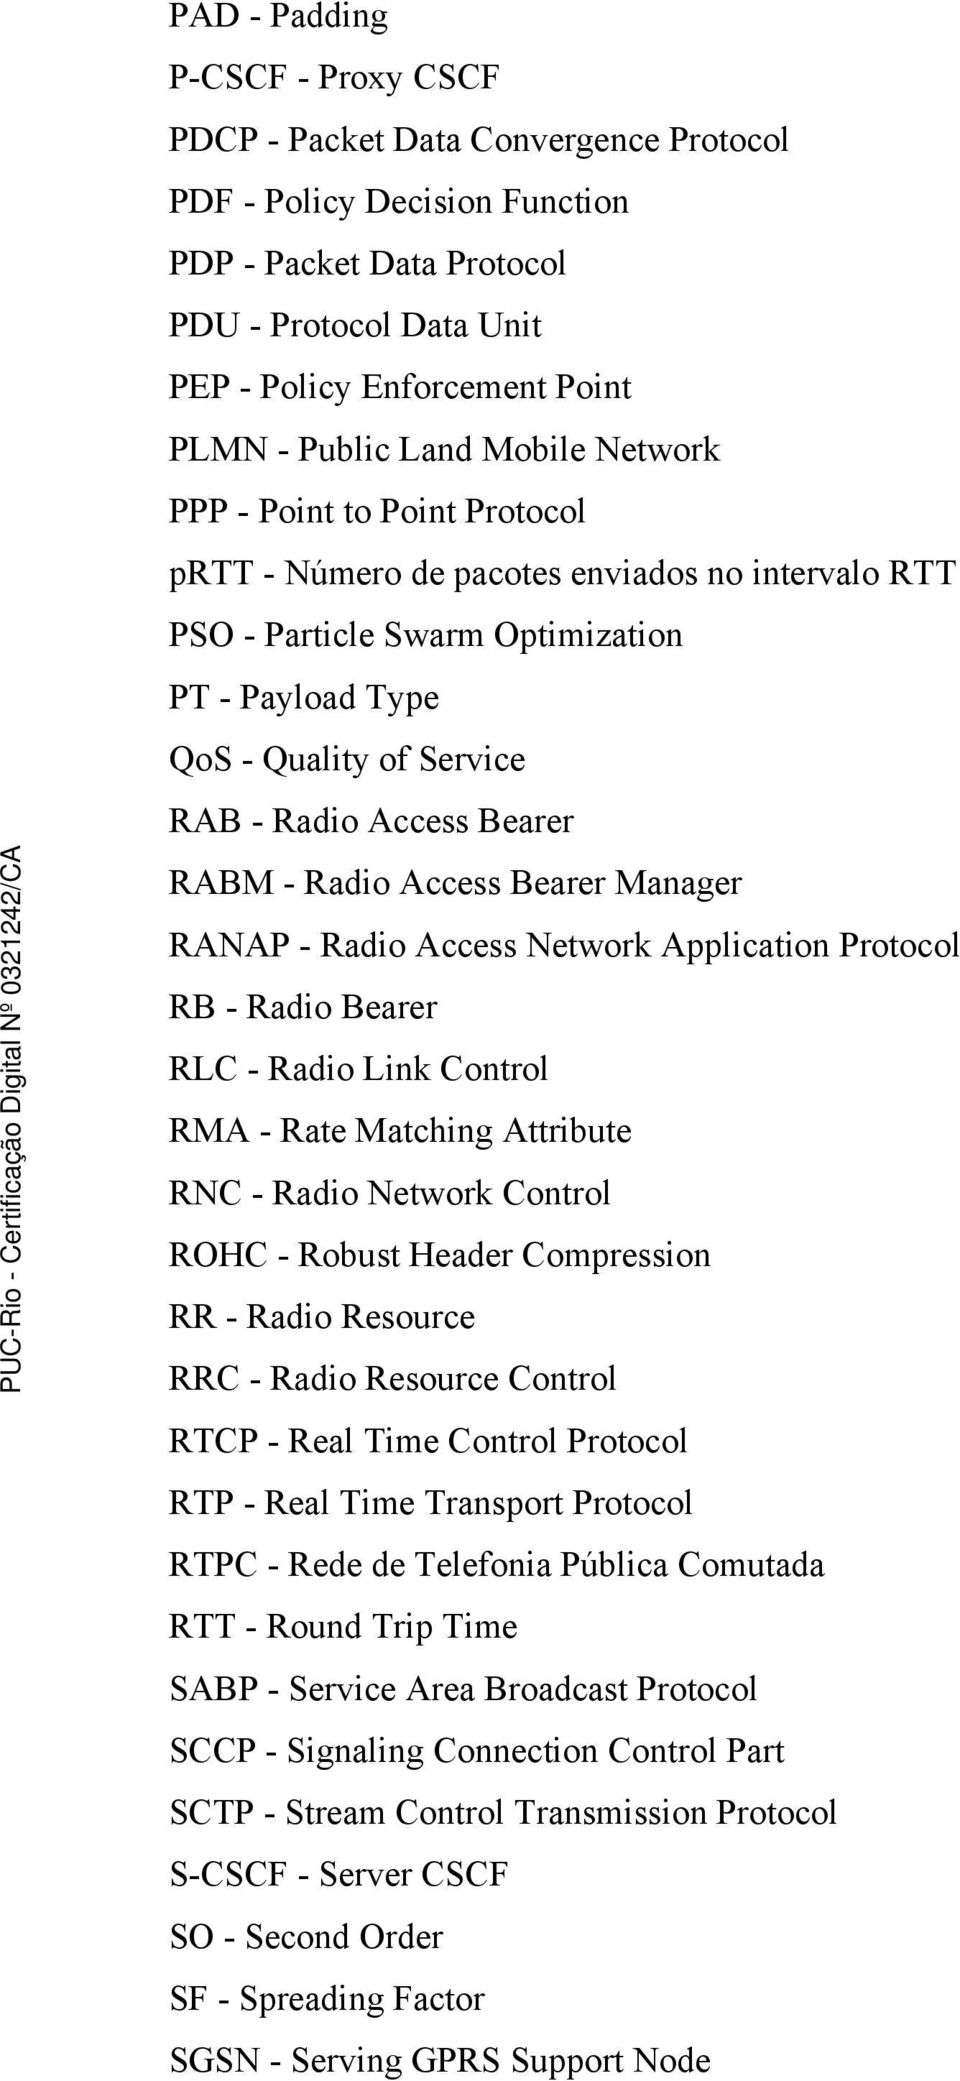 Access Bearer RABM - Radio Access Bearer Manager RANAP - Radio Access Network Application Protocol RB - Radio Bearer RLC - Radio Link Control RMA - Rate Matching Attribute RNC - Radio Network Control